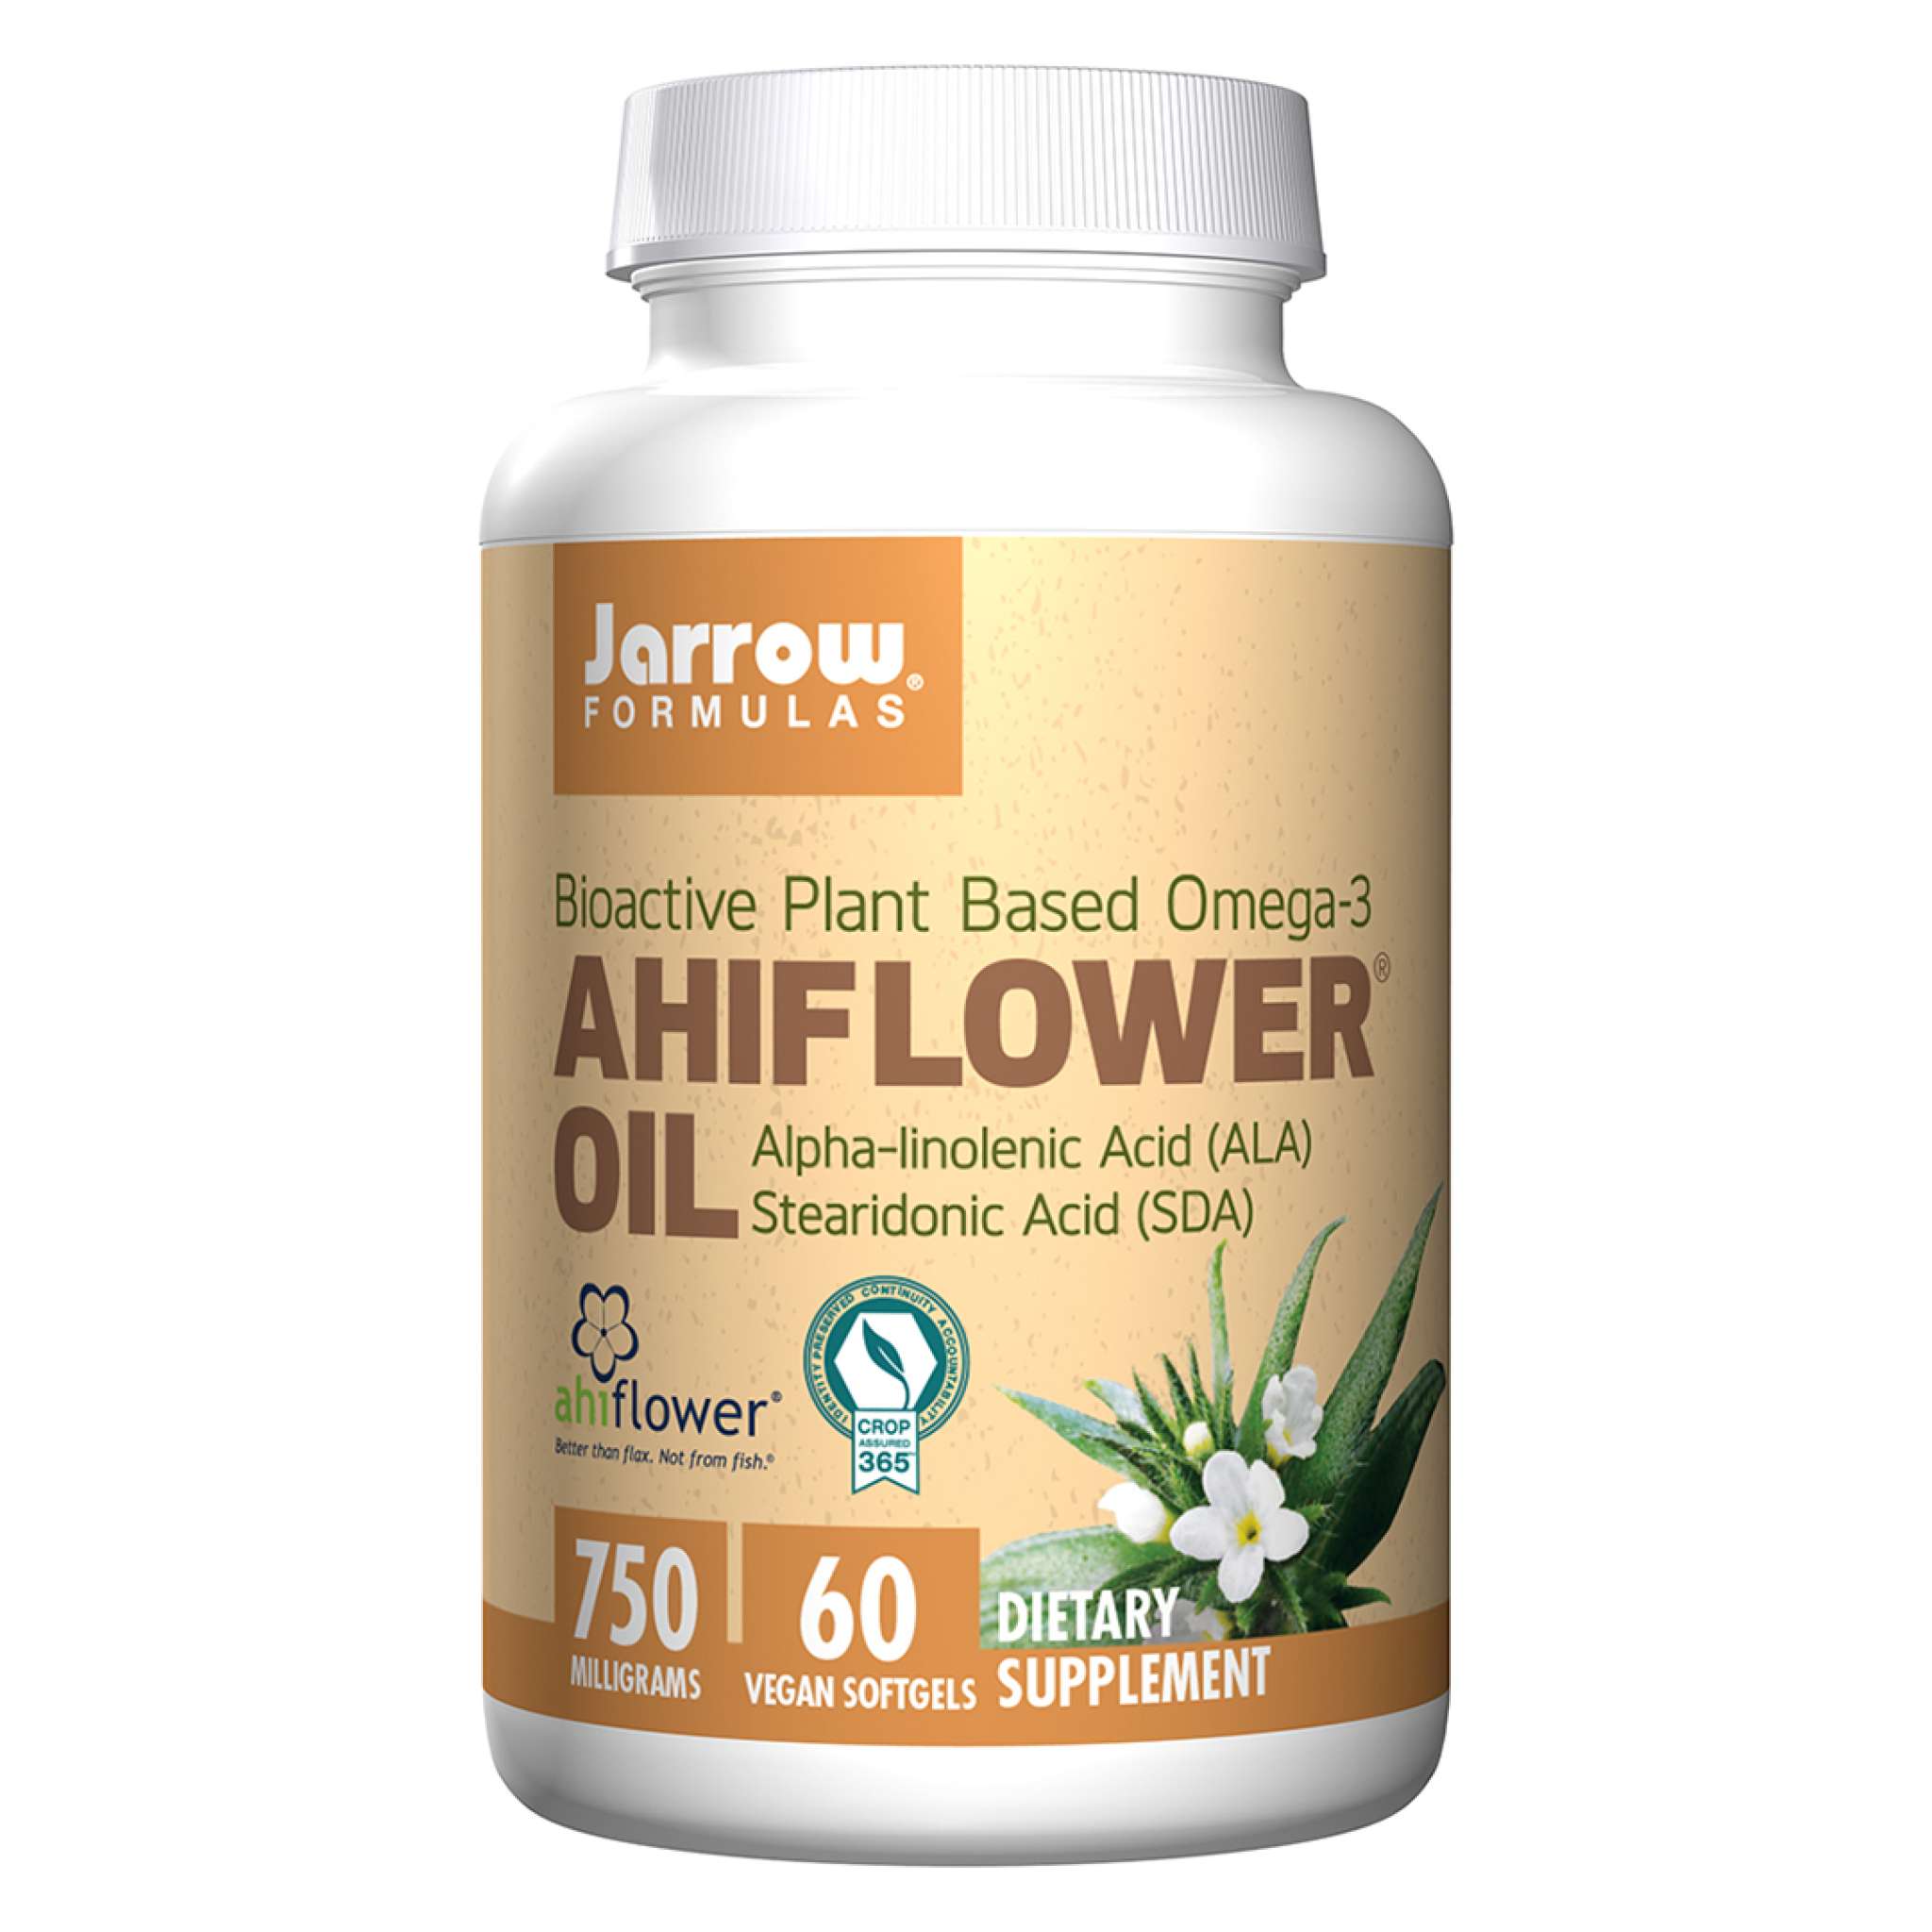 Jarrow Formulas - Ahiflower Oil 750 softgel Vegan